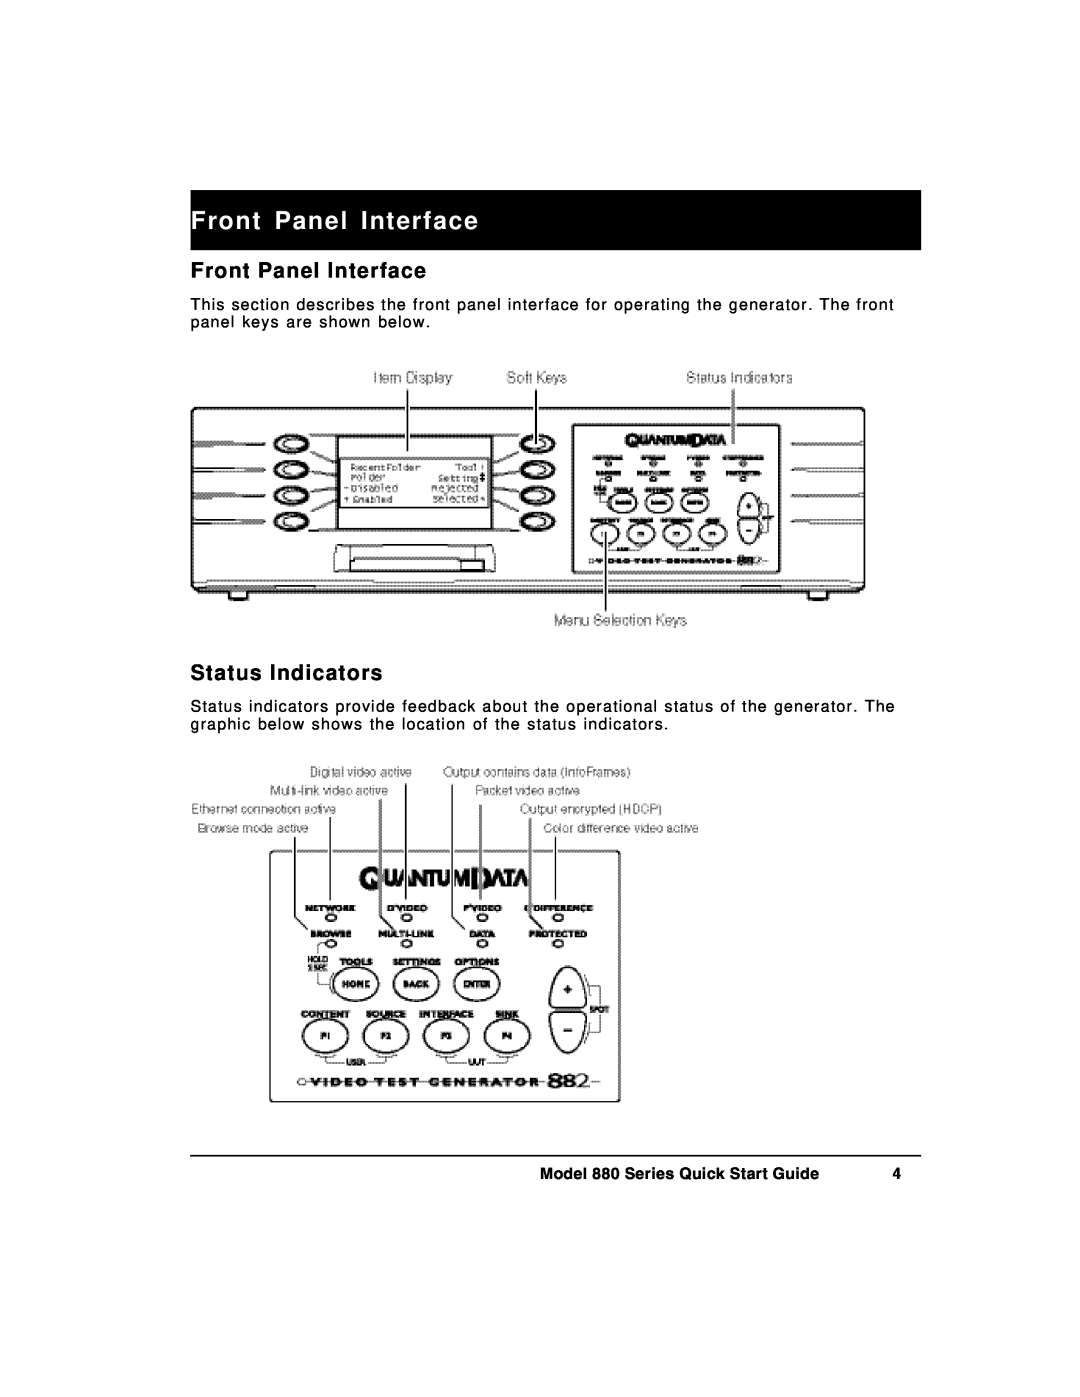 Quantum Data quick start Front Panel Interface, Status Indicators, Model 880 Series Quick Start Guide 